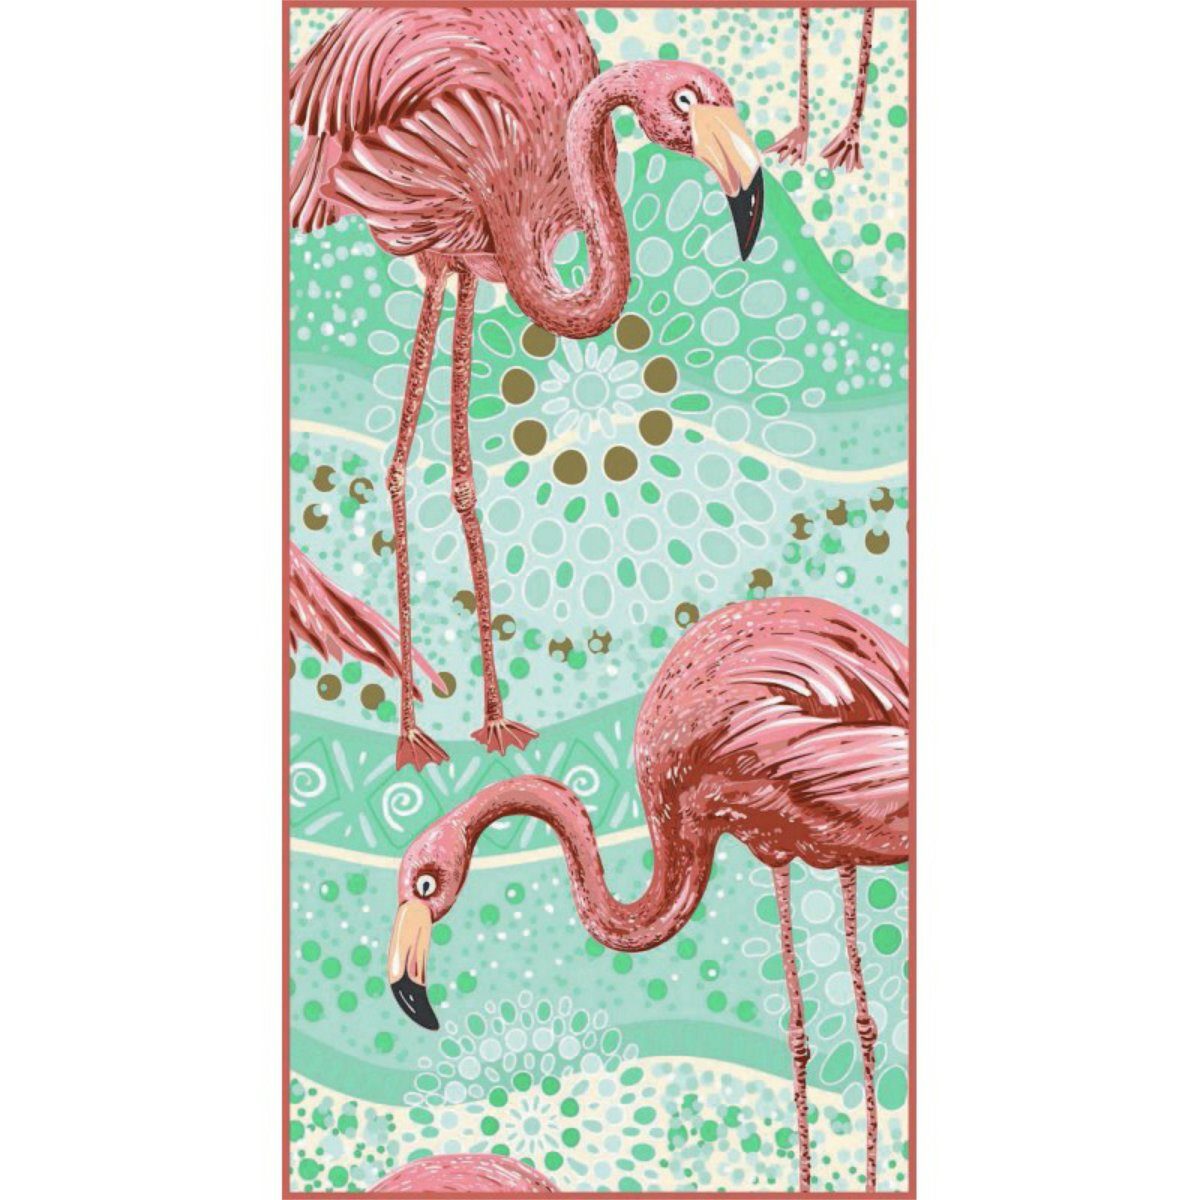 Ecarla pln Strandtuch Pink Flamingo Vintage XL Badetuch, mikrofaser, 70x150 cm | Strandtücher